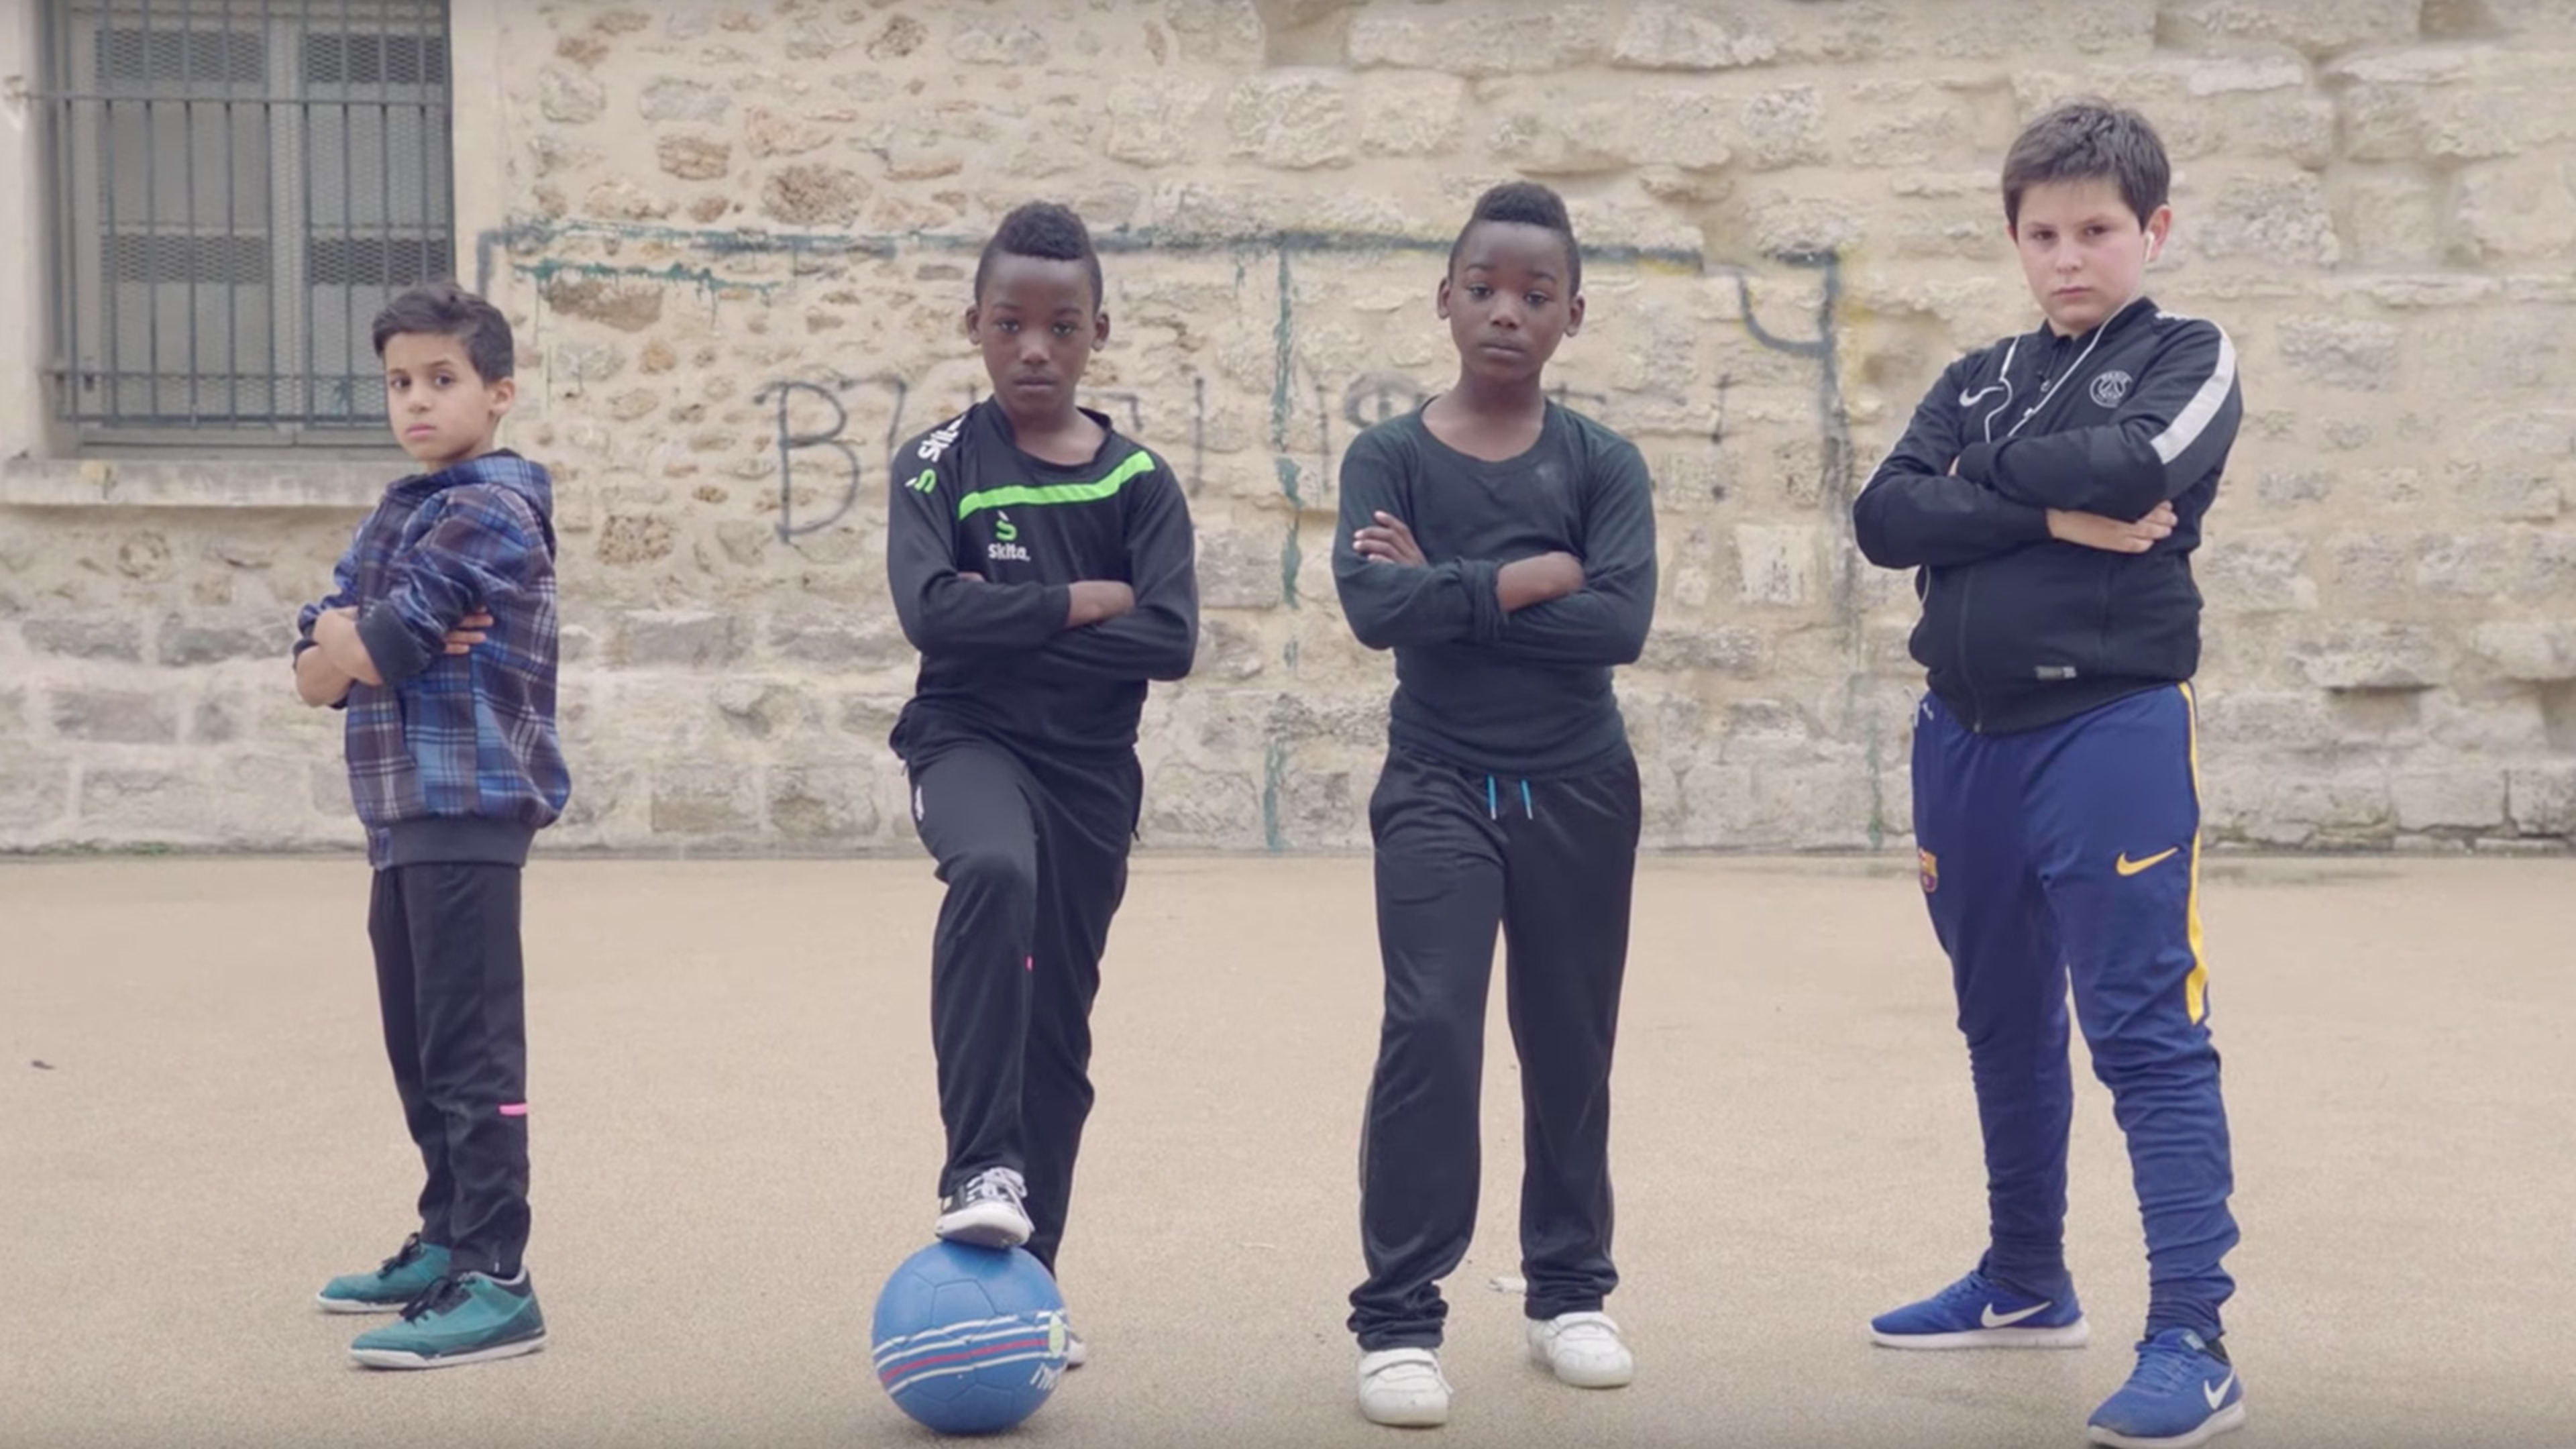 Nike And Ad Agency Produce Documentary On France’s Street Football Scene